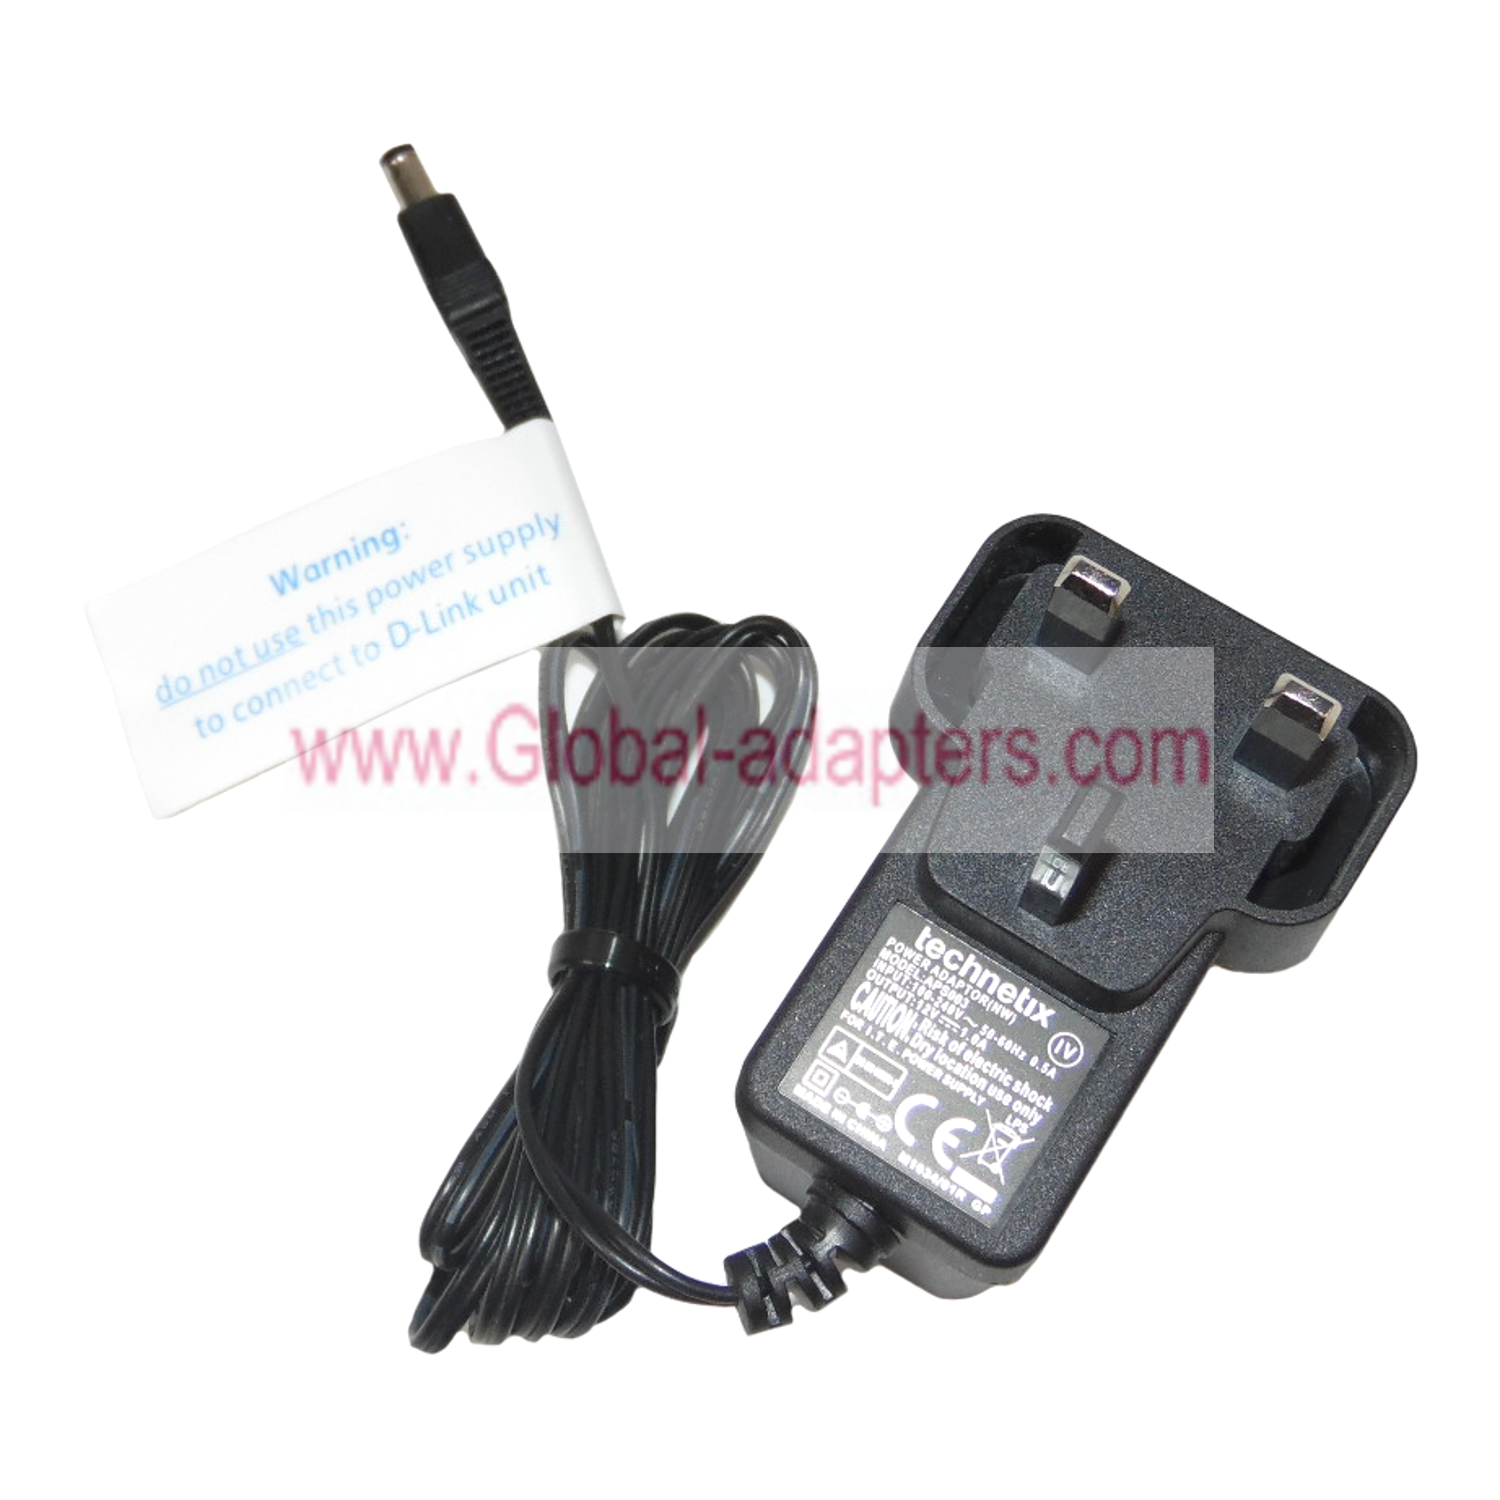 *New* Technetix 12V 1.0A APS003 AC Adapter Power Supply